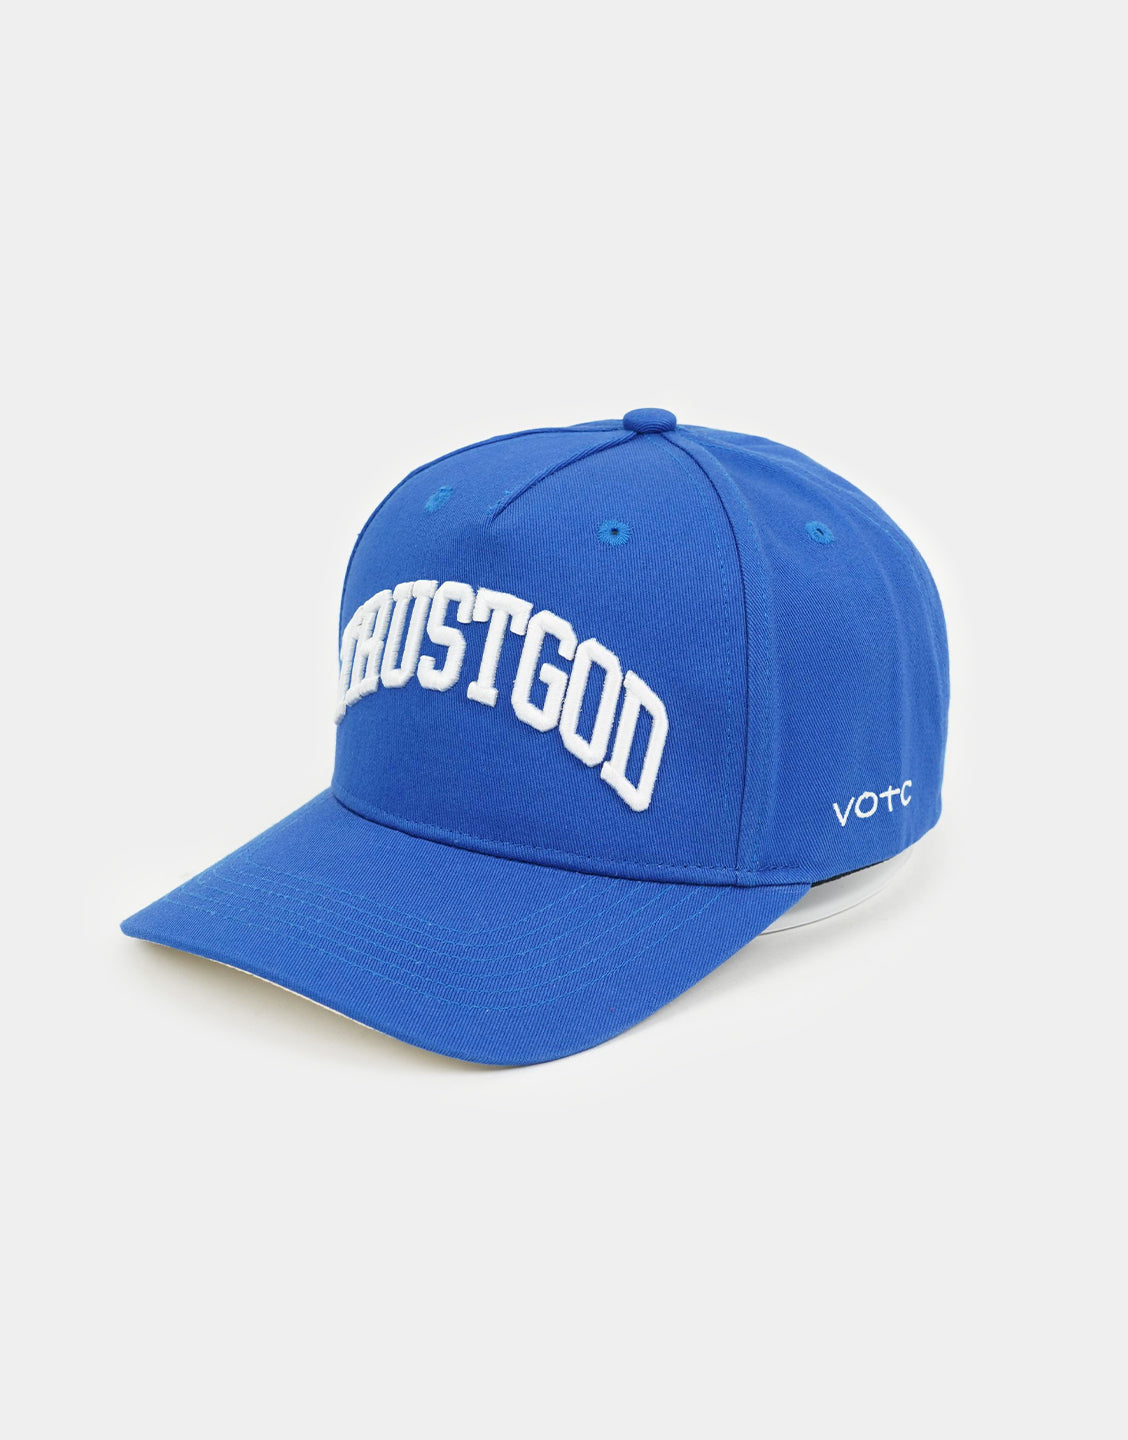 Trust God Premium Baseball Hat - Royal Blue